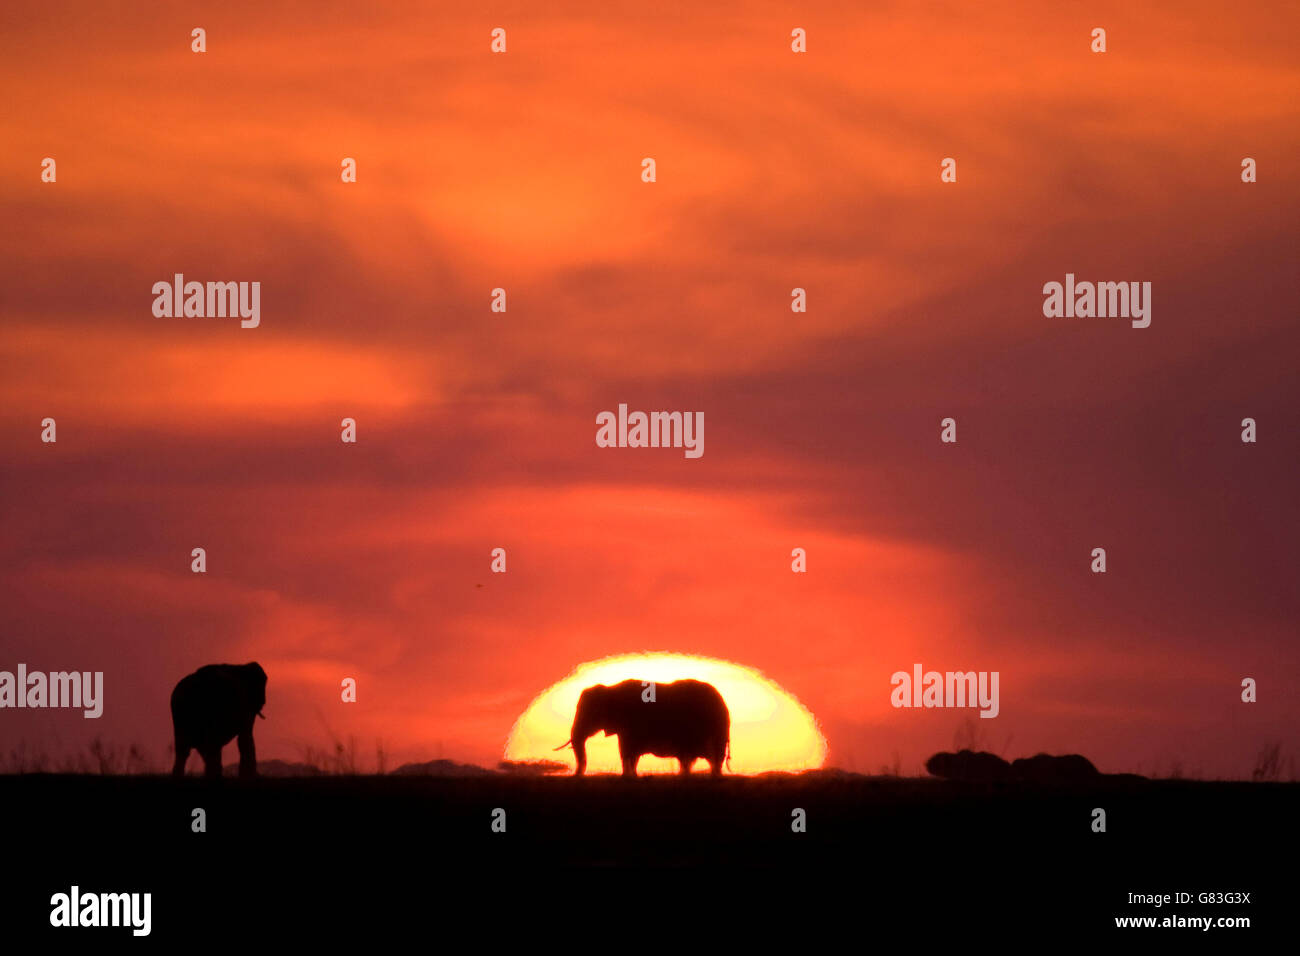 Elephants silhouette, Caprivi Strip, Namibia Stock Photo - Alamy